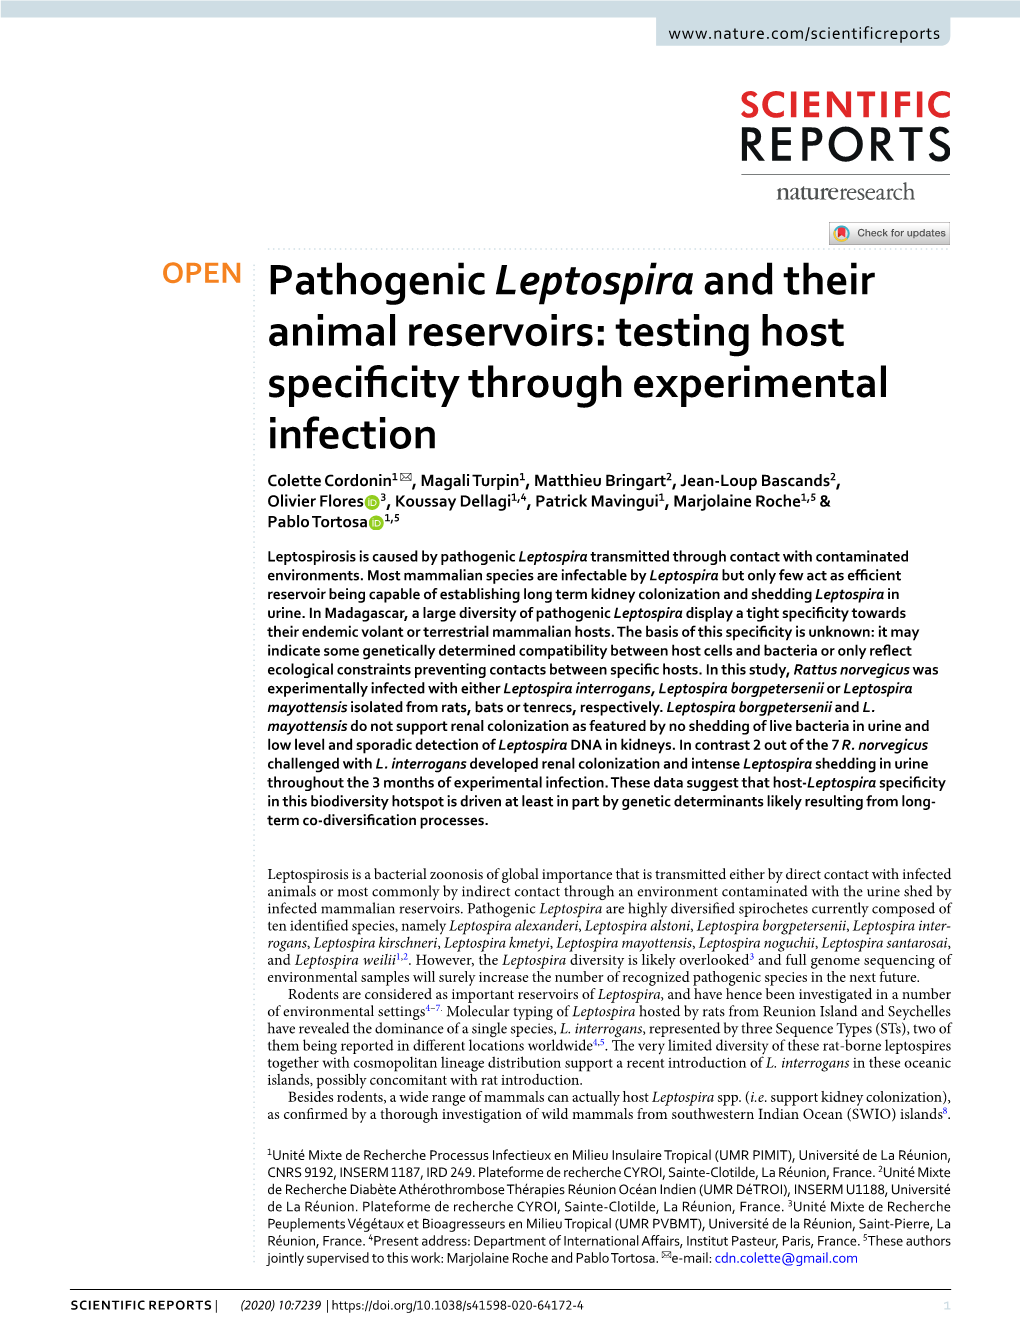 Pathogenic Leptospira and Their Animal Reservoirs: Testing Host